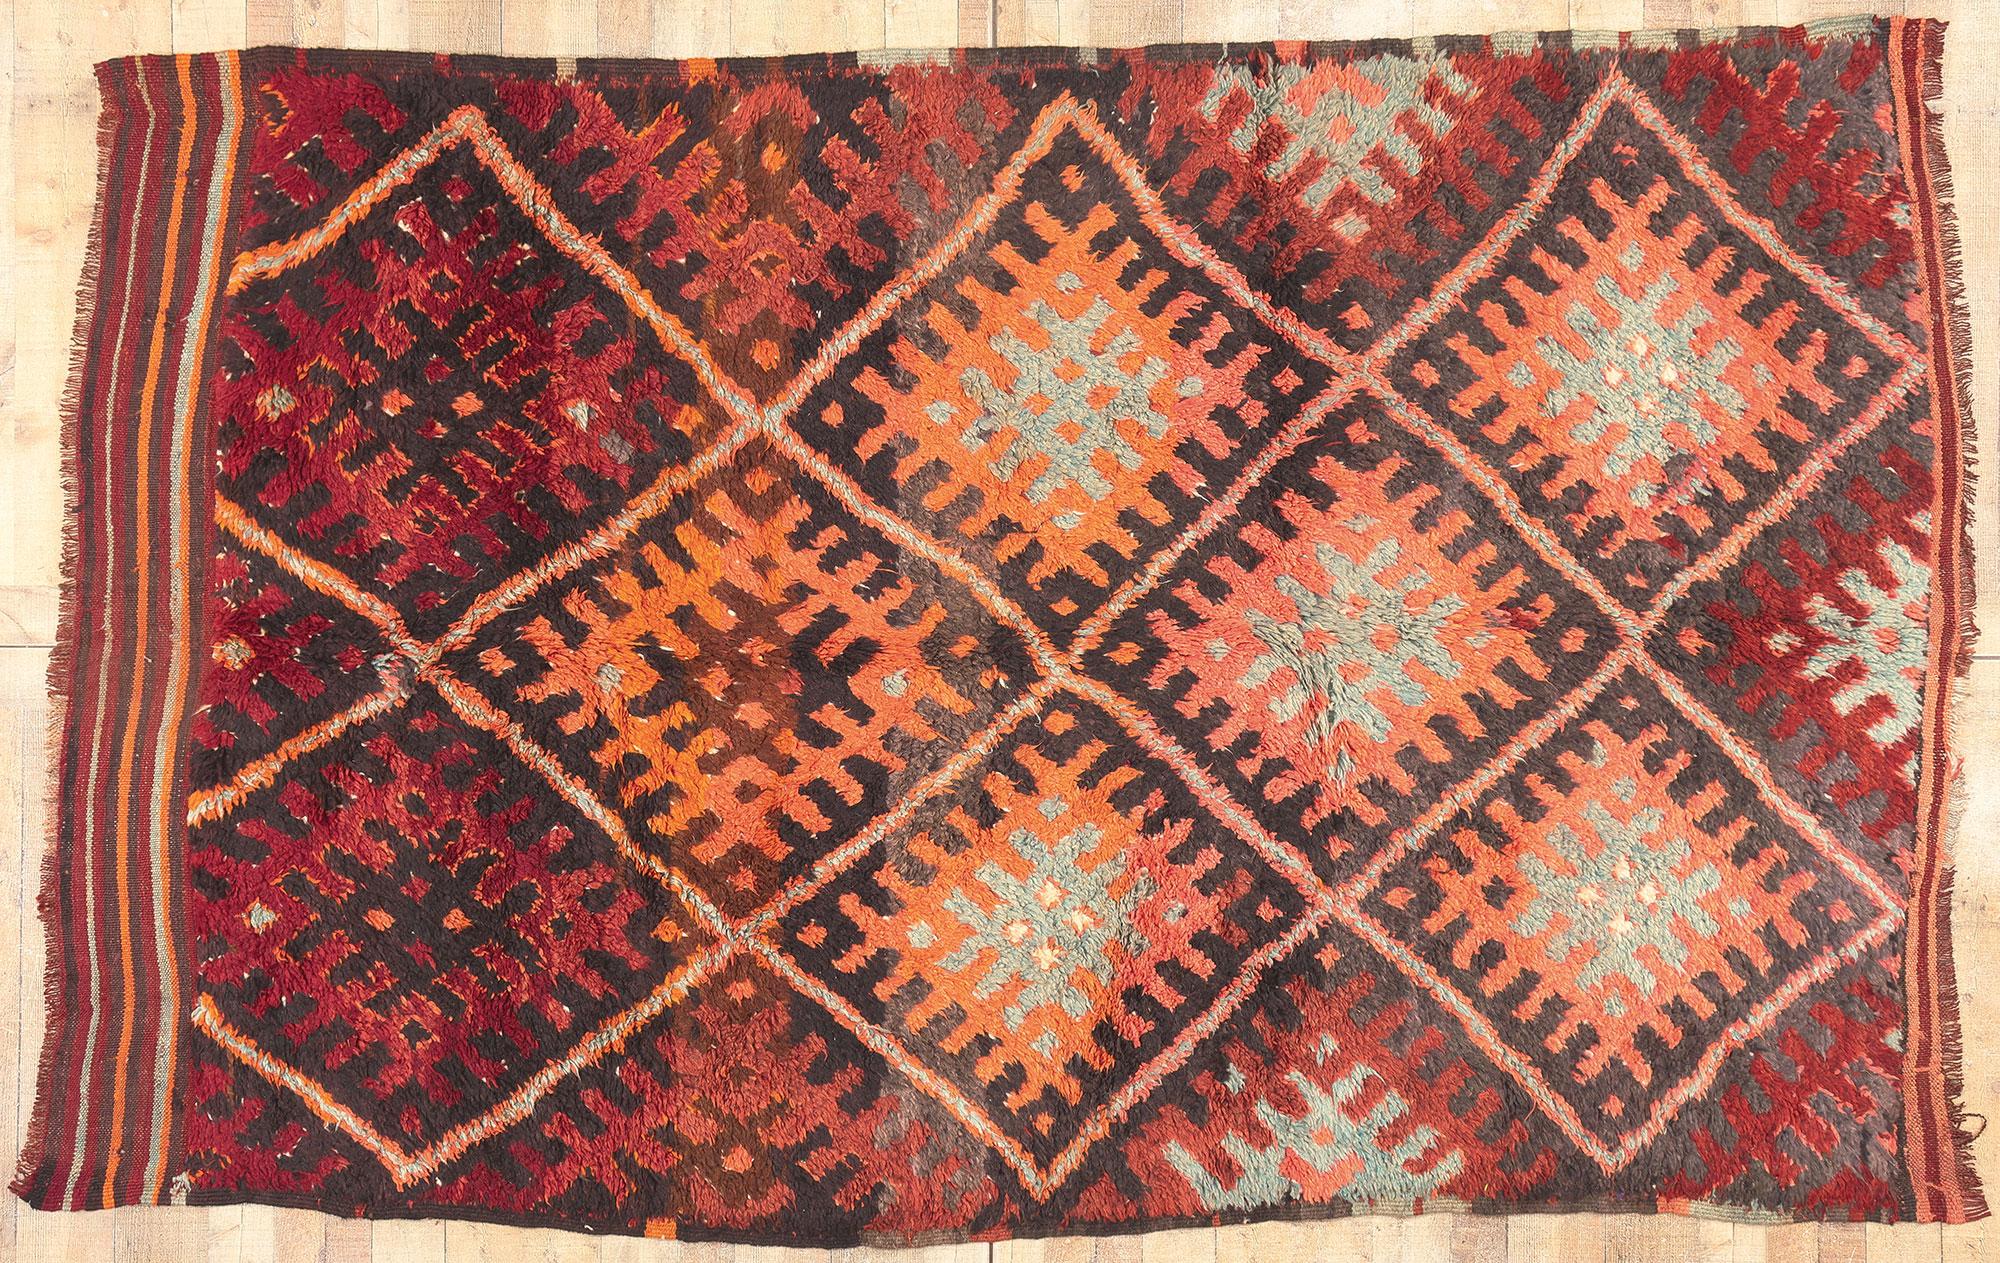 Vintage Beni MGuild Moroccan Rug, Midcentury Modern Meets Tribal Enchantment For Sale 2